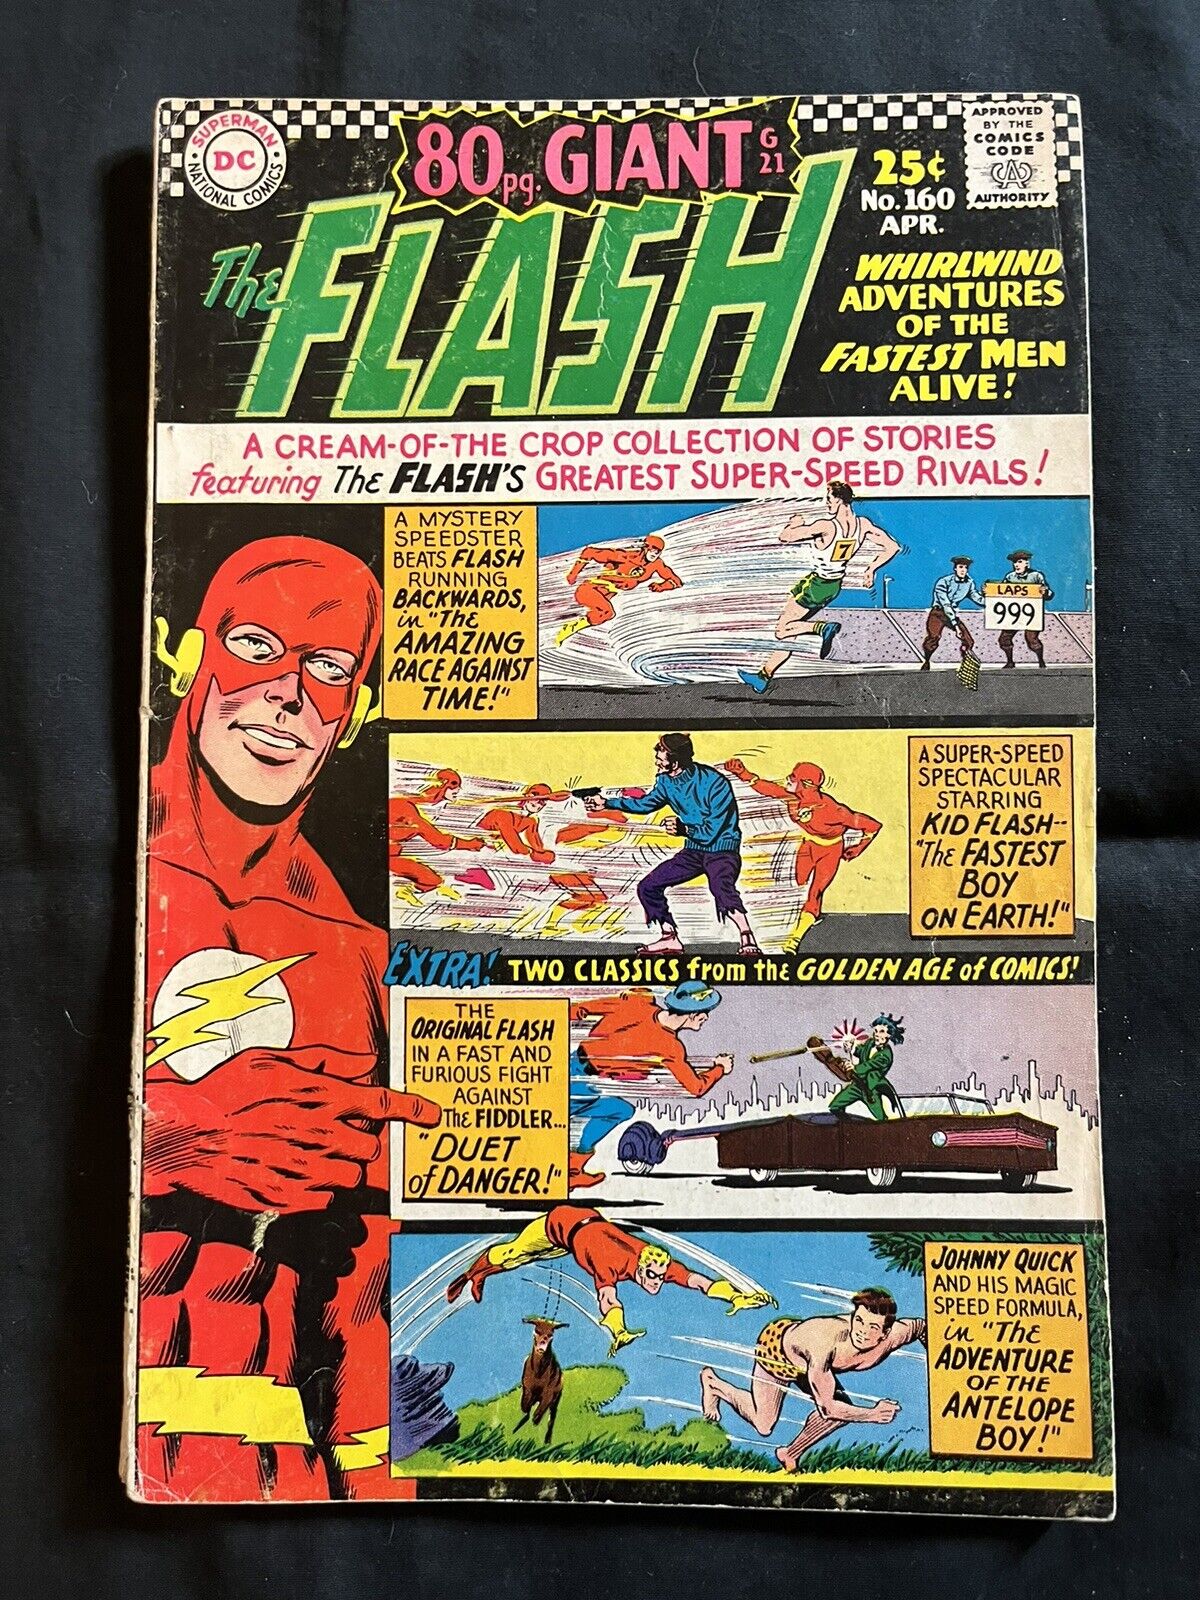 The Flash, #160, April 1966, 80 Pg. Giant